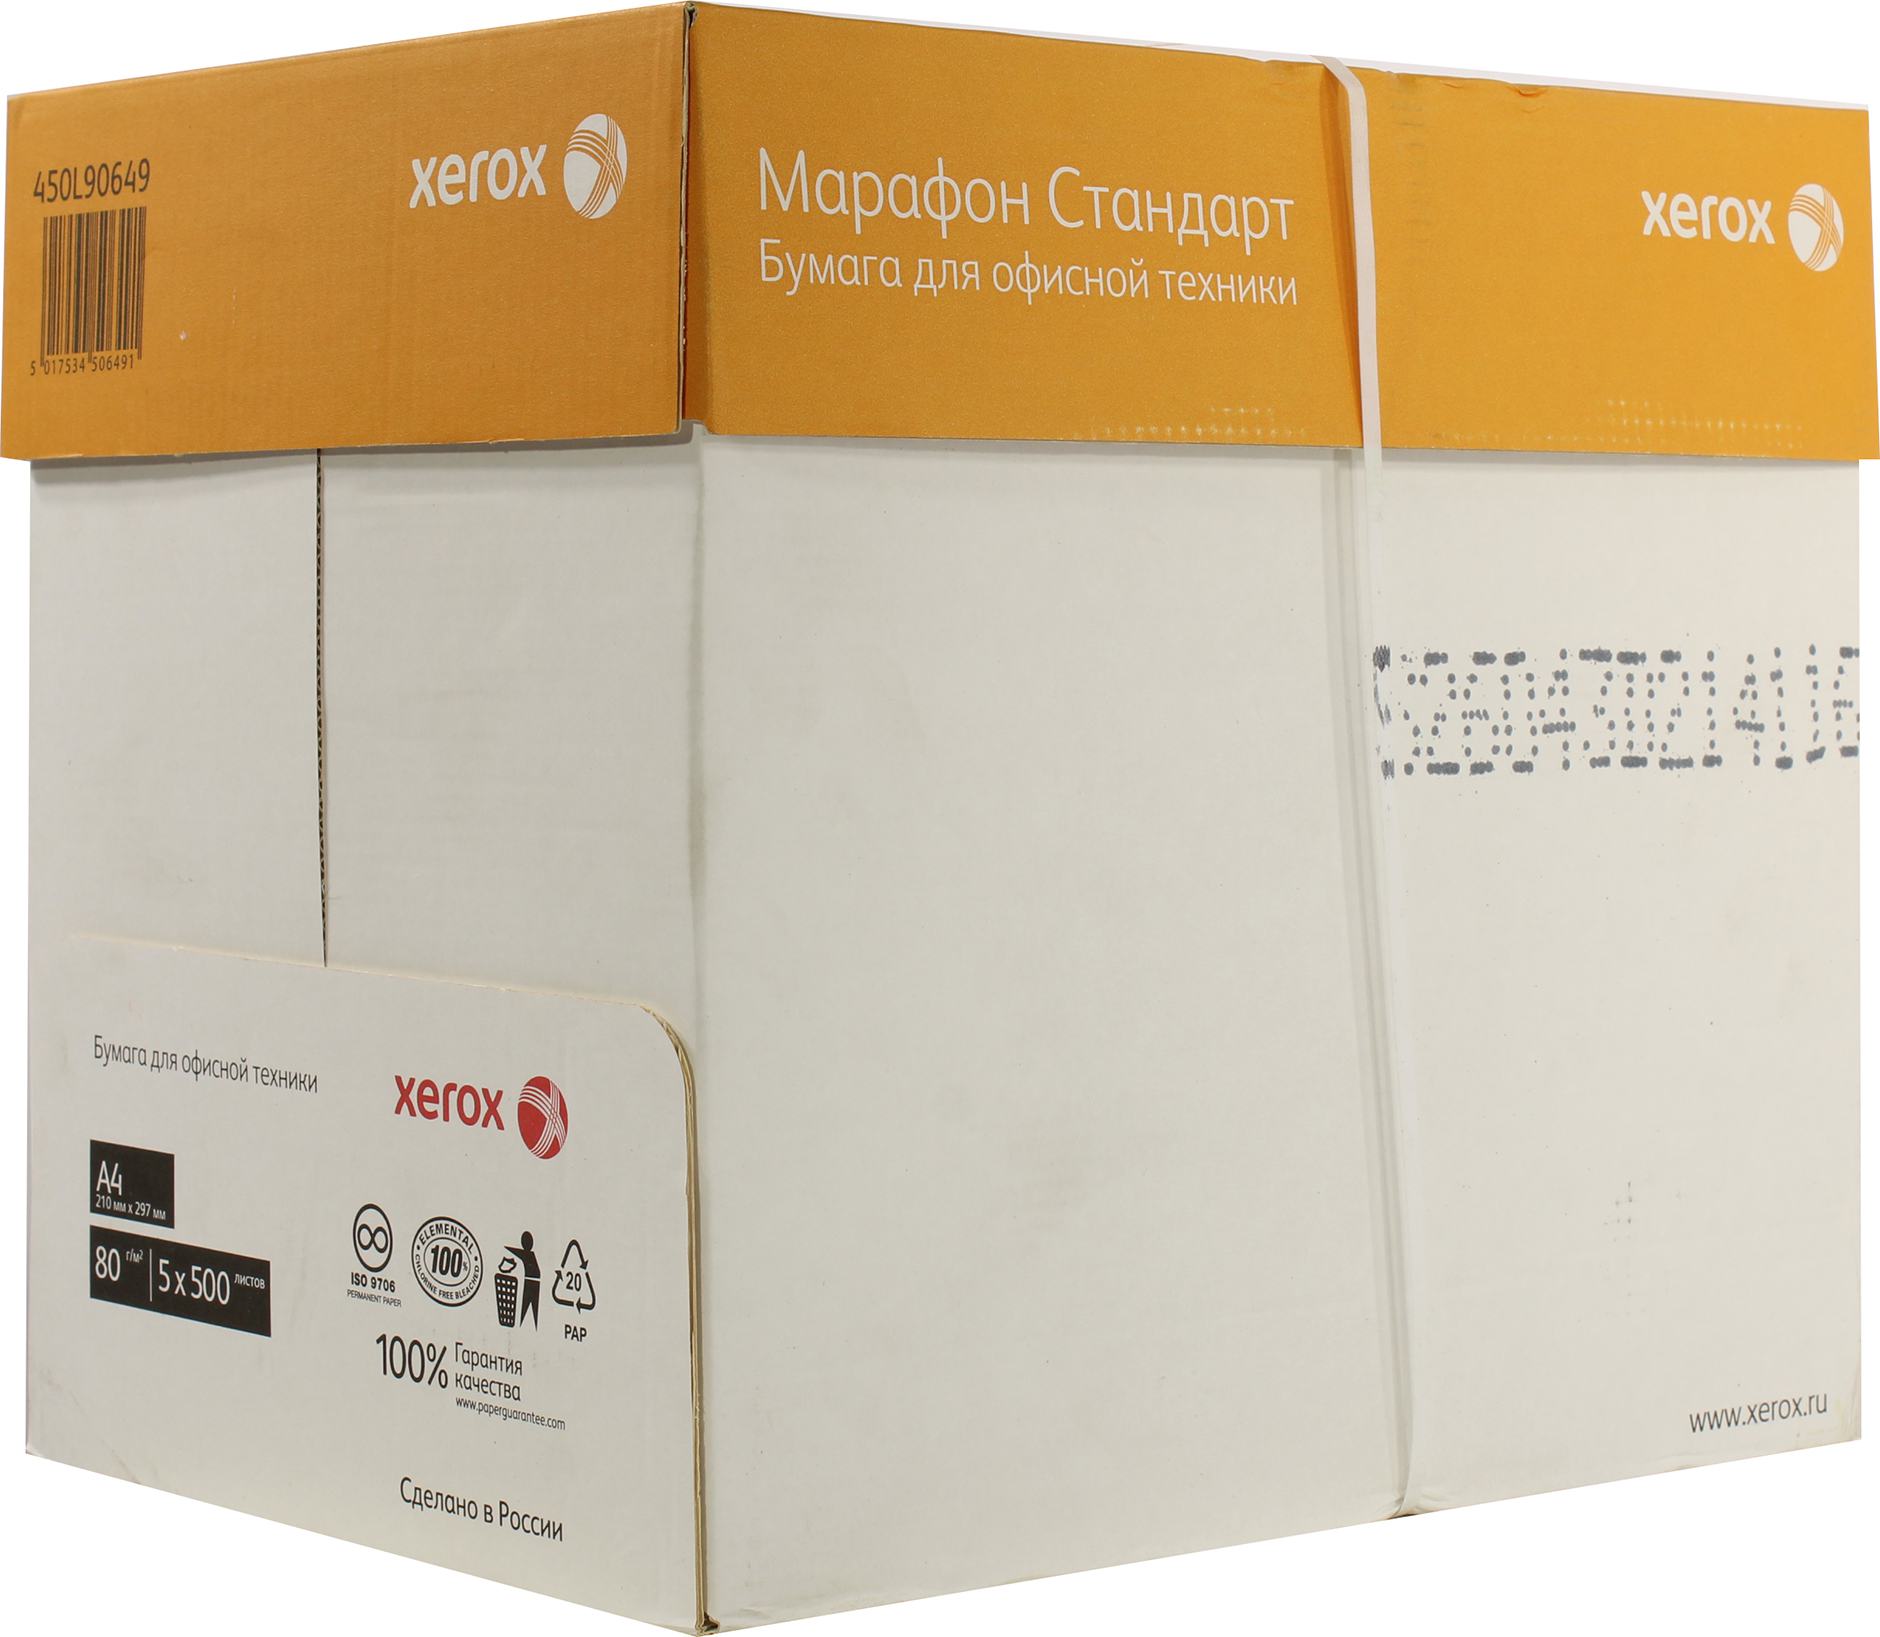 Бумага A4 80 г/м² 5x500 листов, 89% Xerox Марафон Стандарт (450L90649)